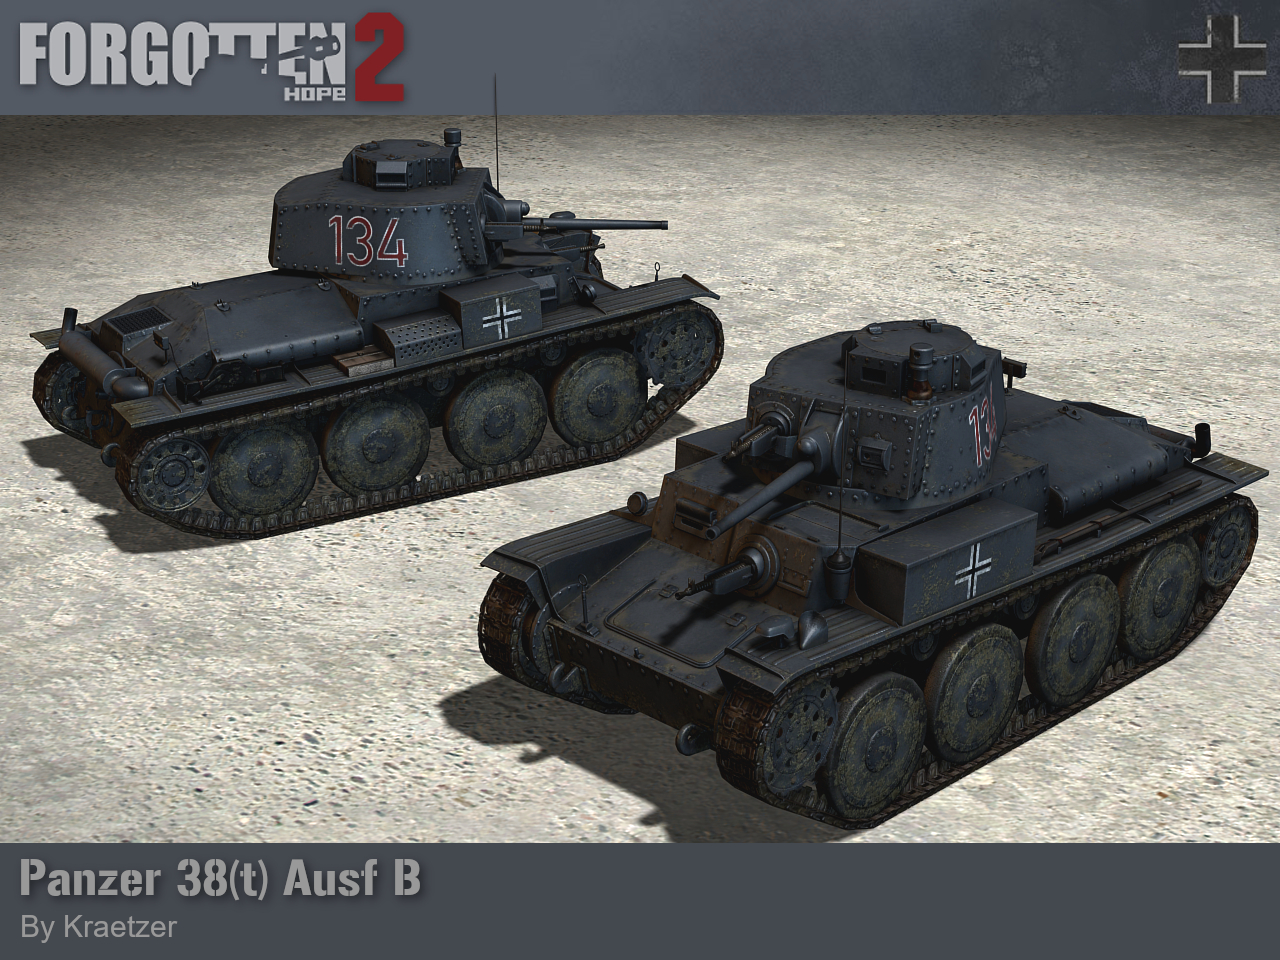 Panzer 38(t) | Forgotten Hope 2 Wiki | Fandom